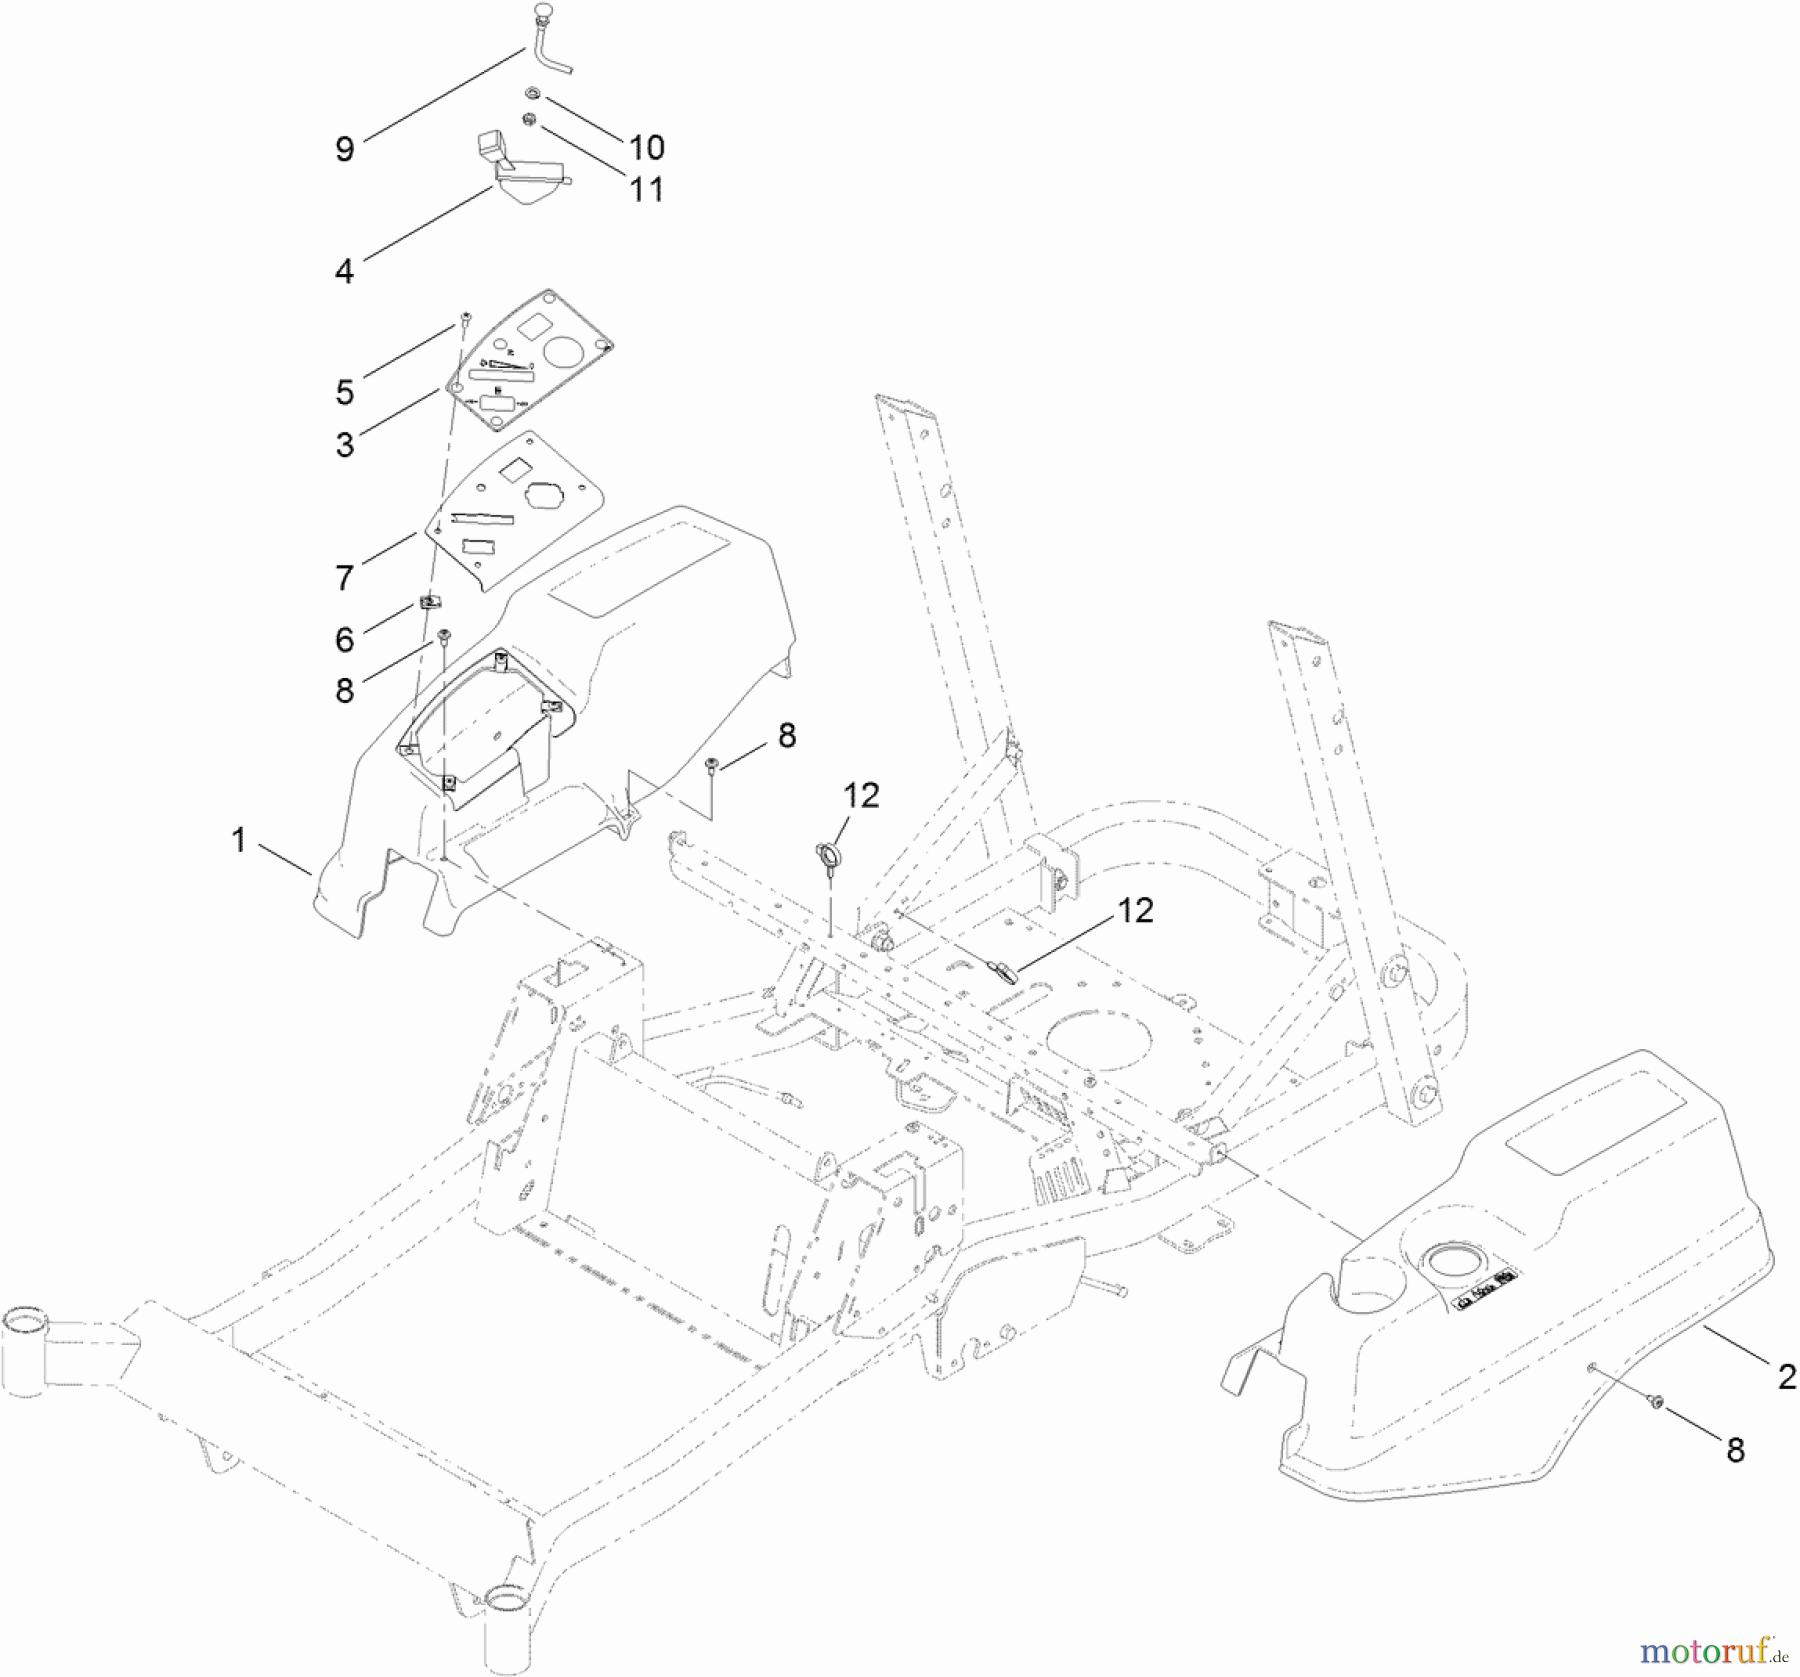  Toro Neu Mowers, Zero-Turn 74920 (ZX4820) - Toro TITAN ZX4820 Zero-Turn-Radius Riding Mower, 2011 (311000001-311999999) CONTROL PANEL AND BODY STYLING POD ASSEMBLY